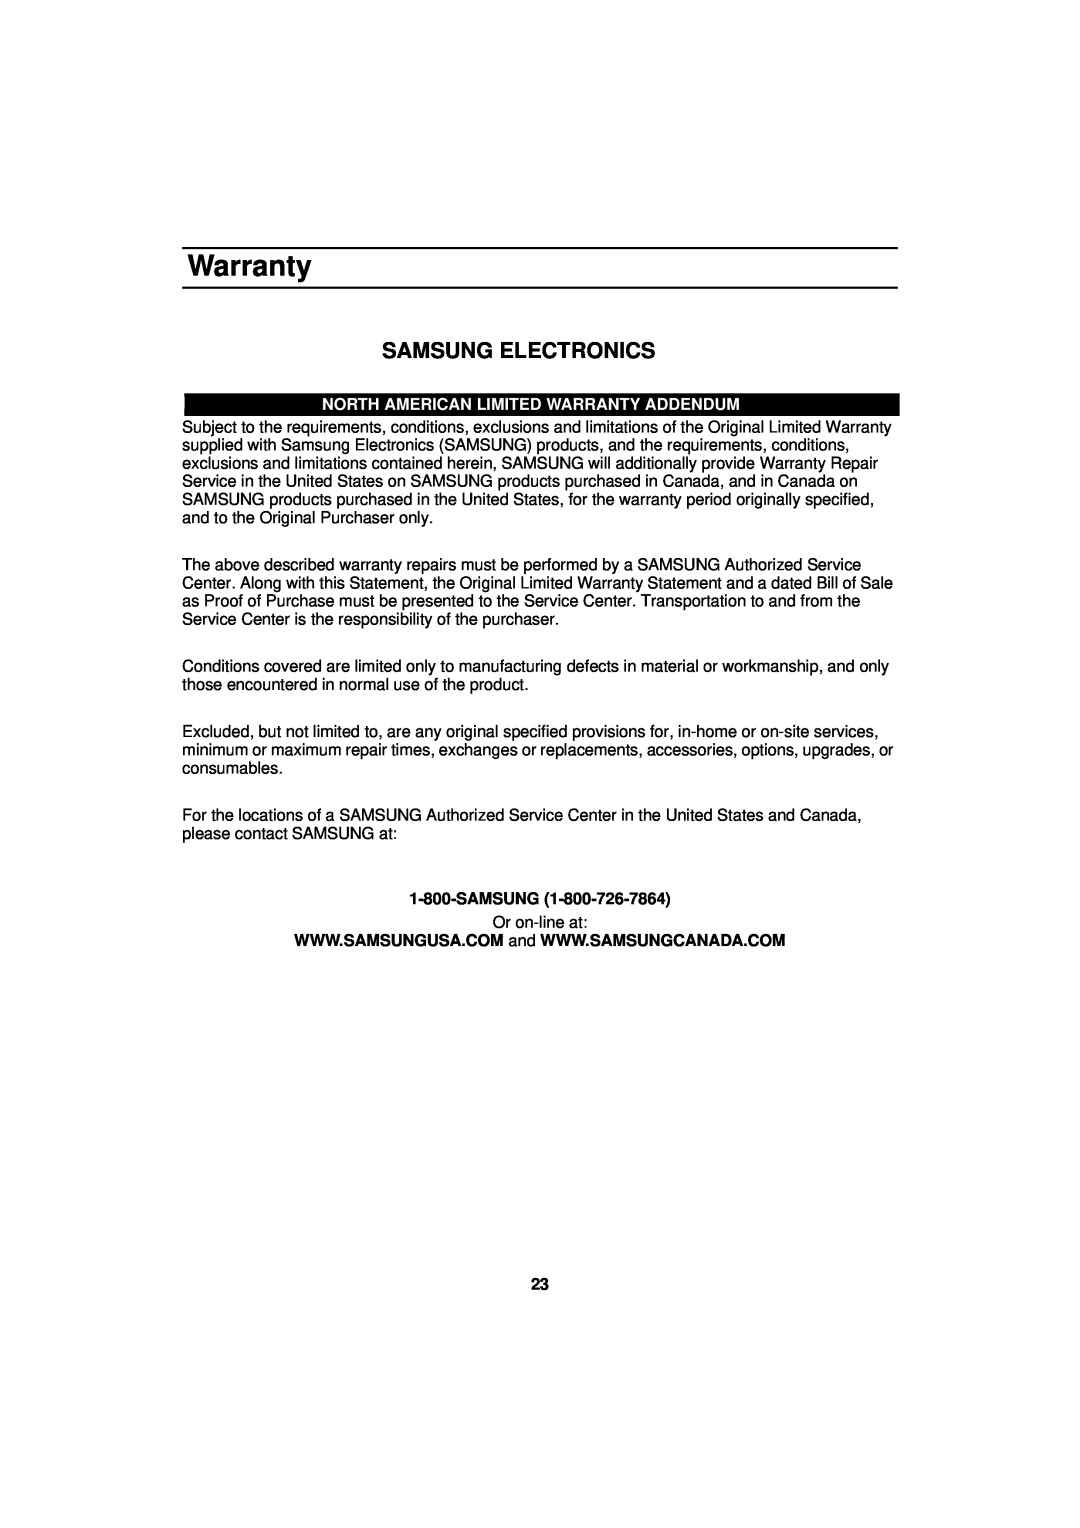 Samsung MW830WA owner manual Samsung Electronics, North American Limited Warranty Addendum 